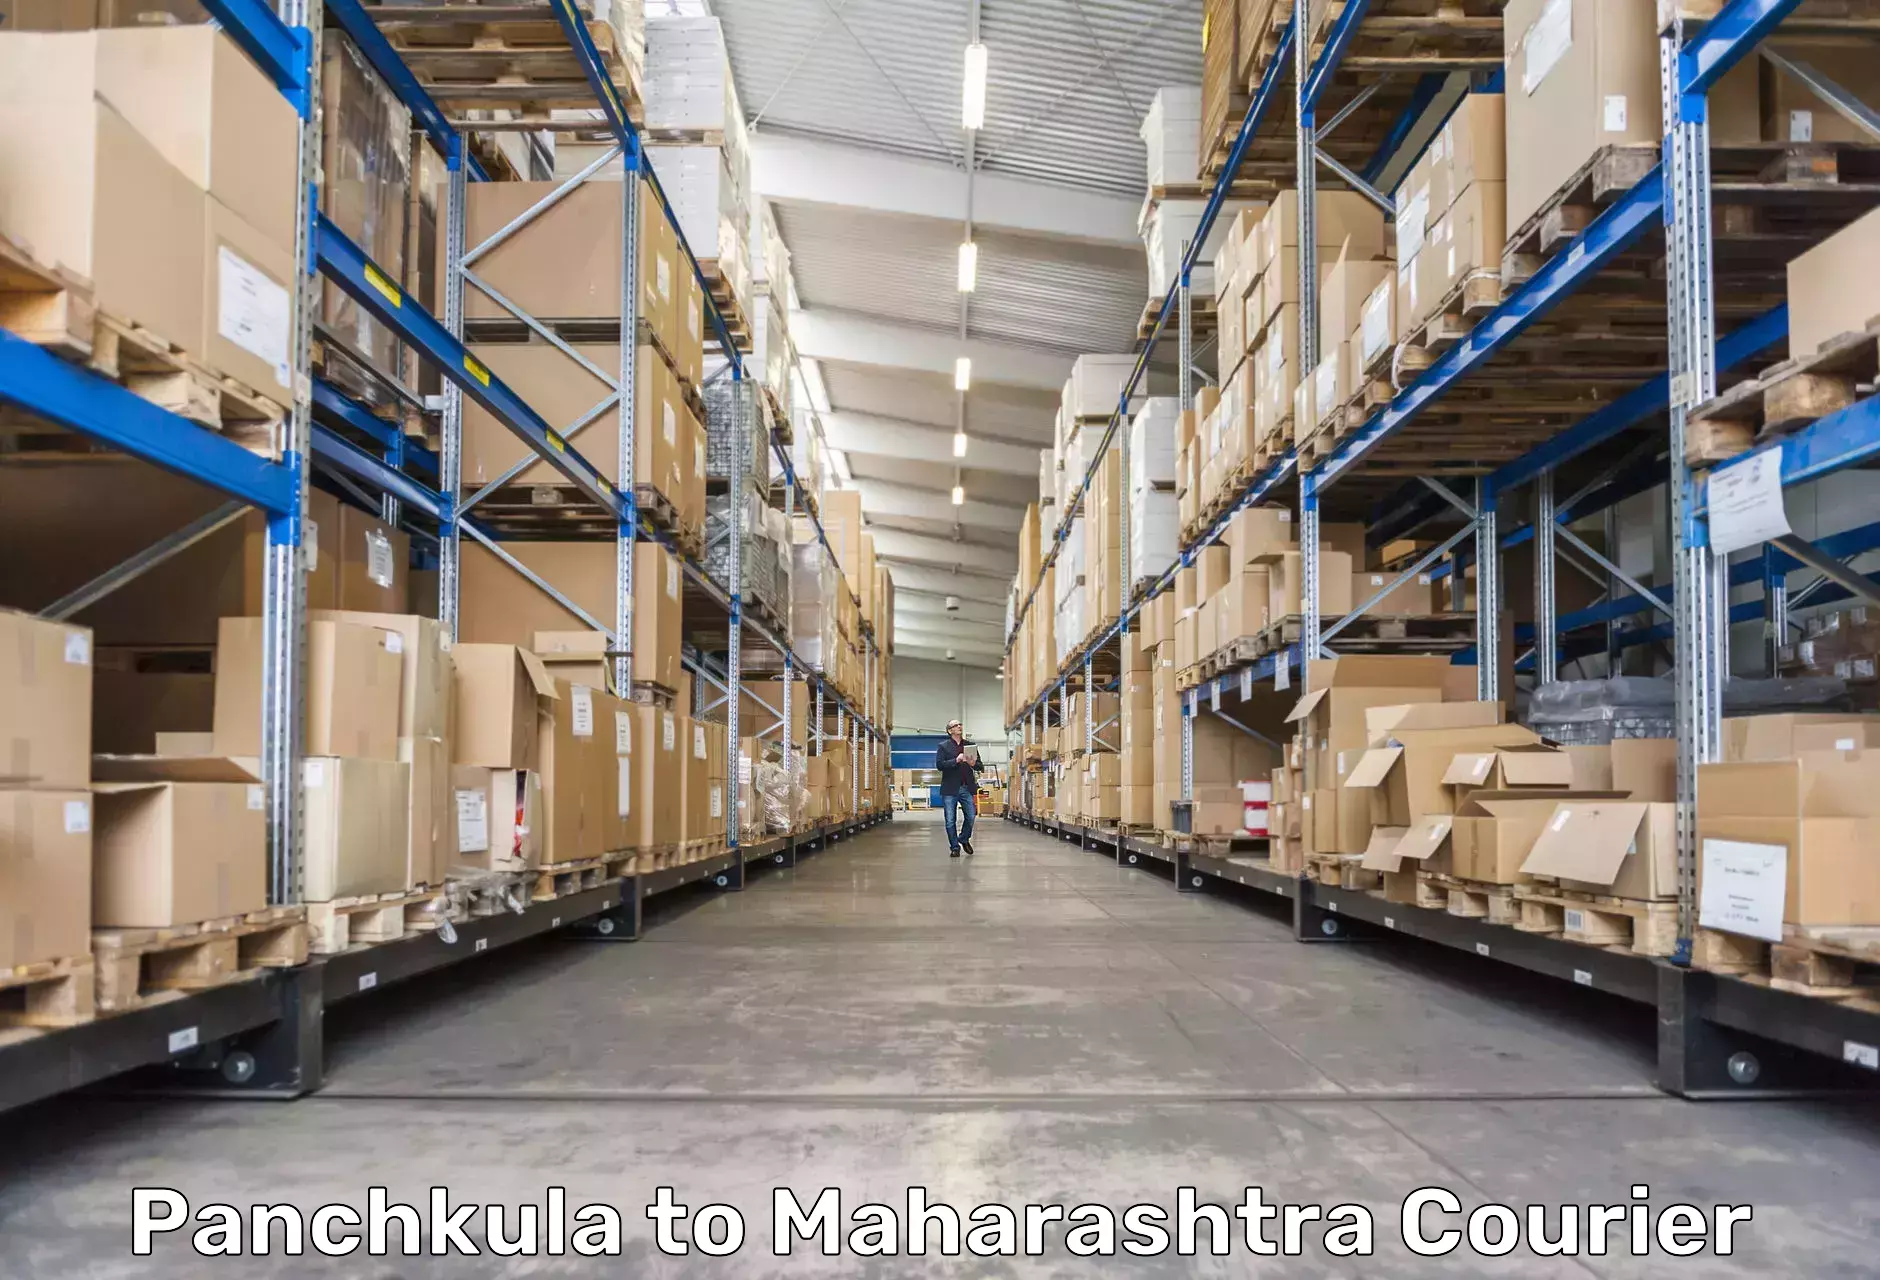 User-friendly delivery service Panchkula to Gadchiroli